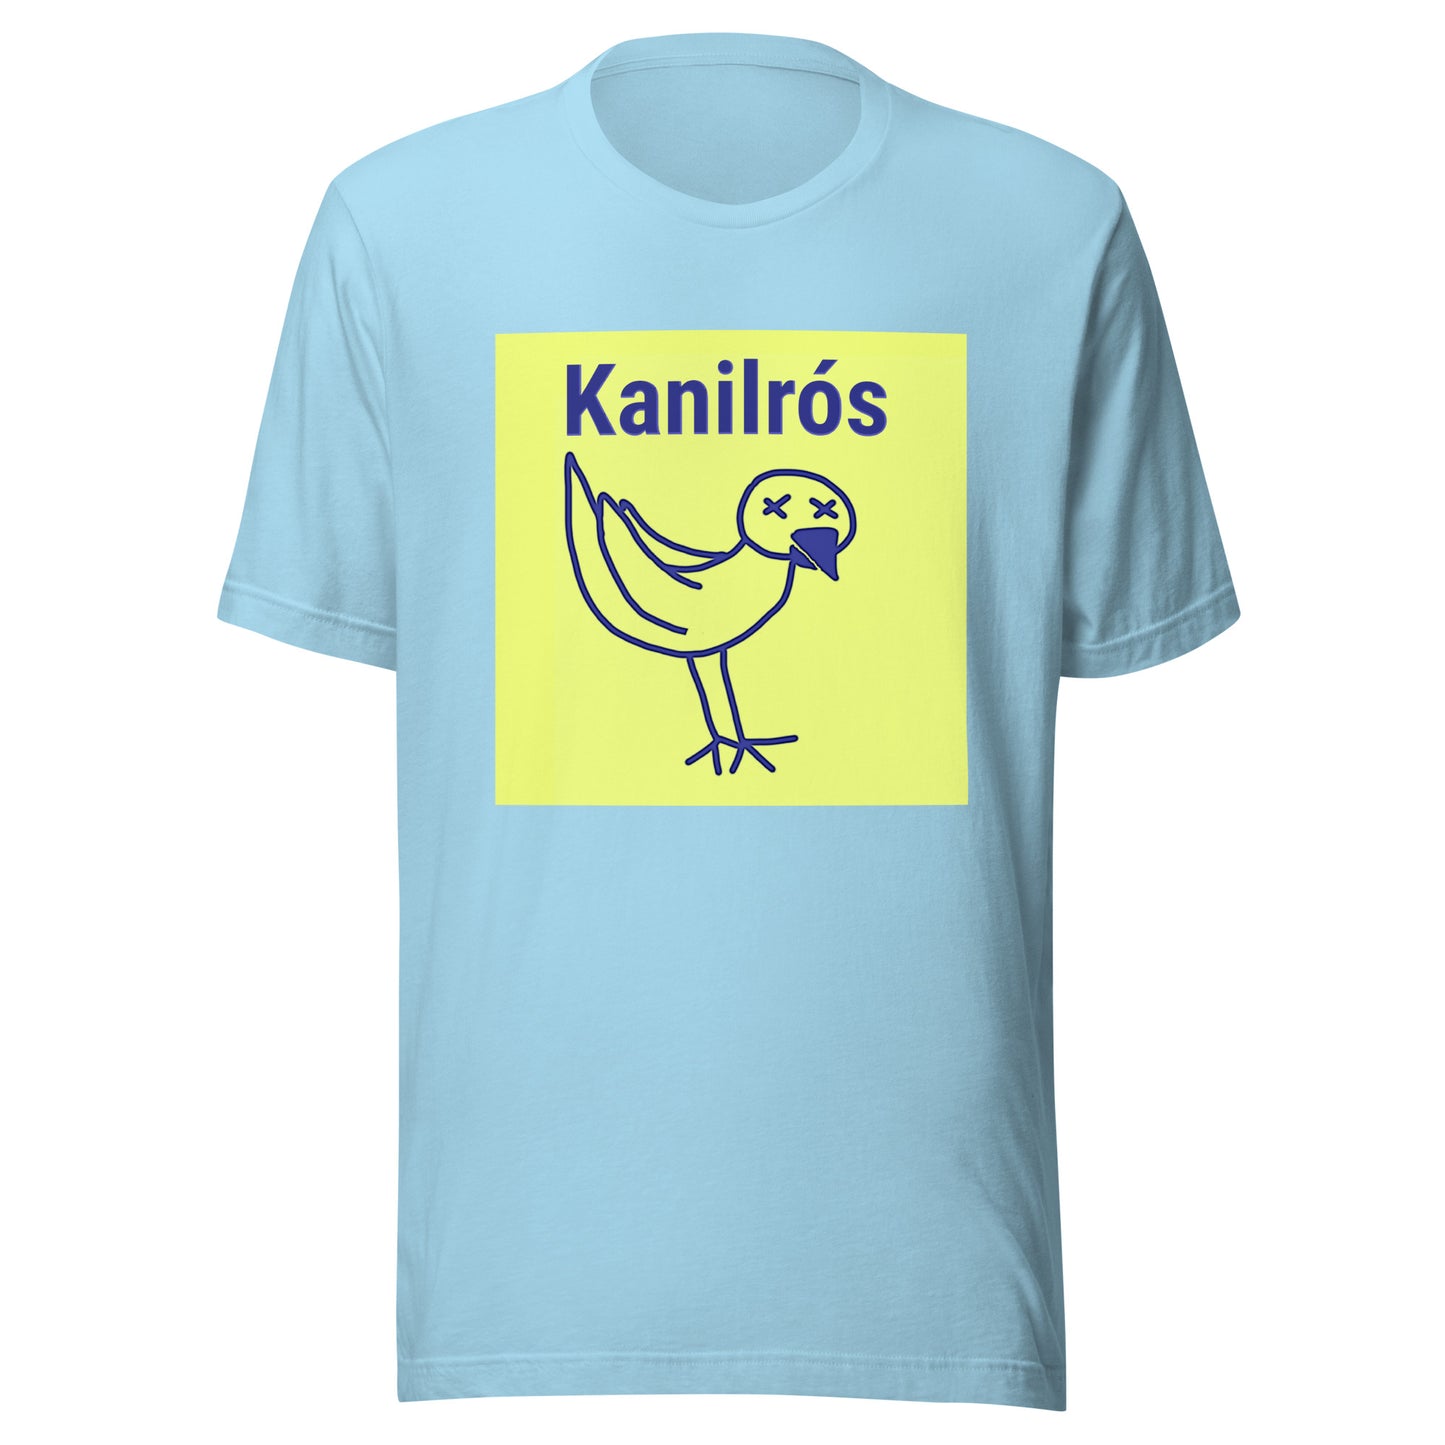 Kanilros Bird T-Shirt